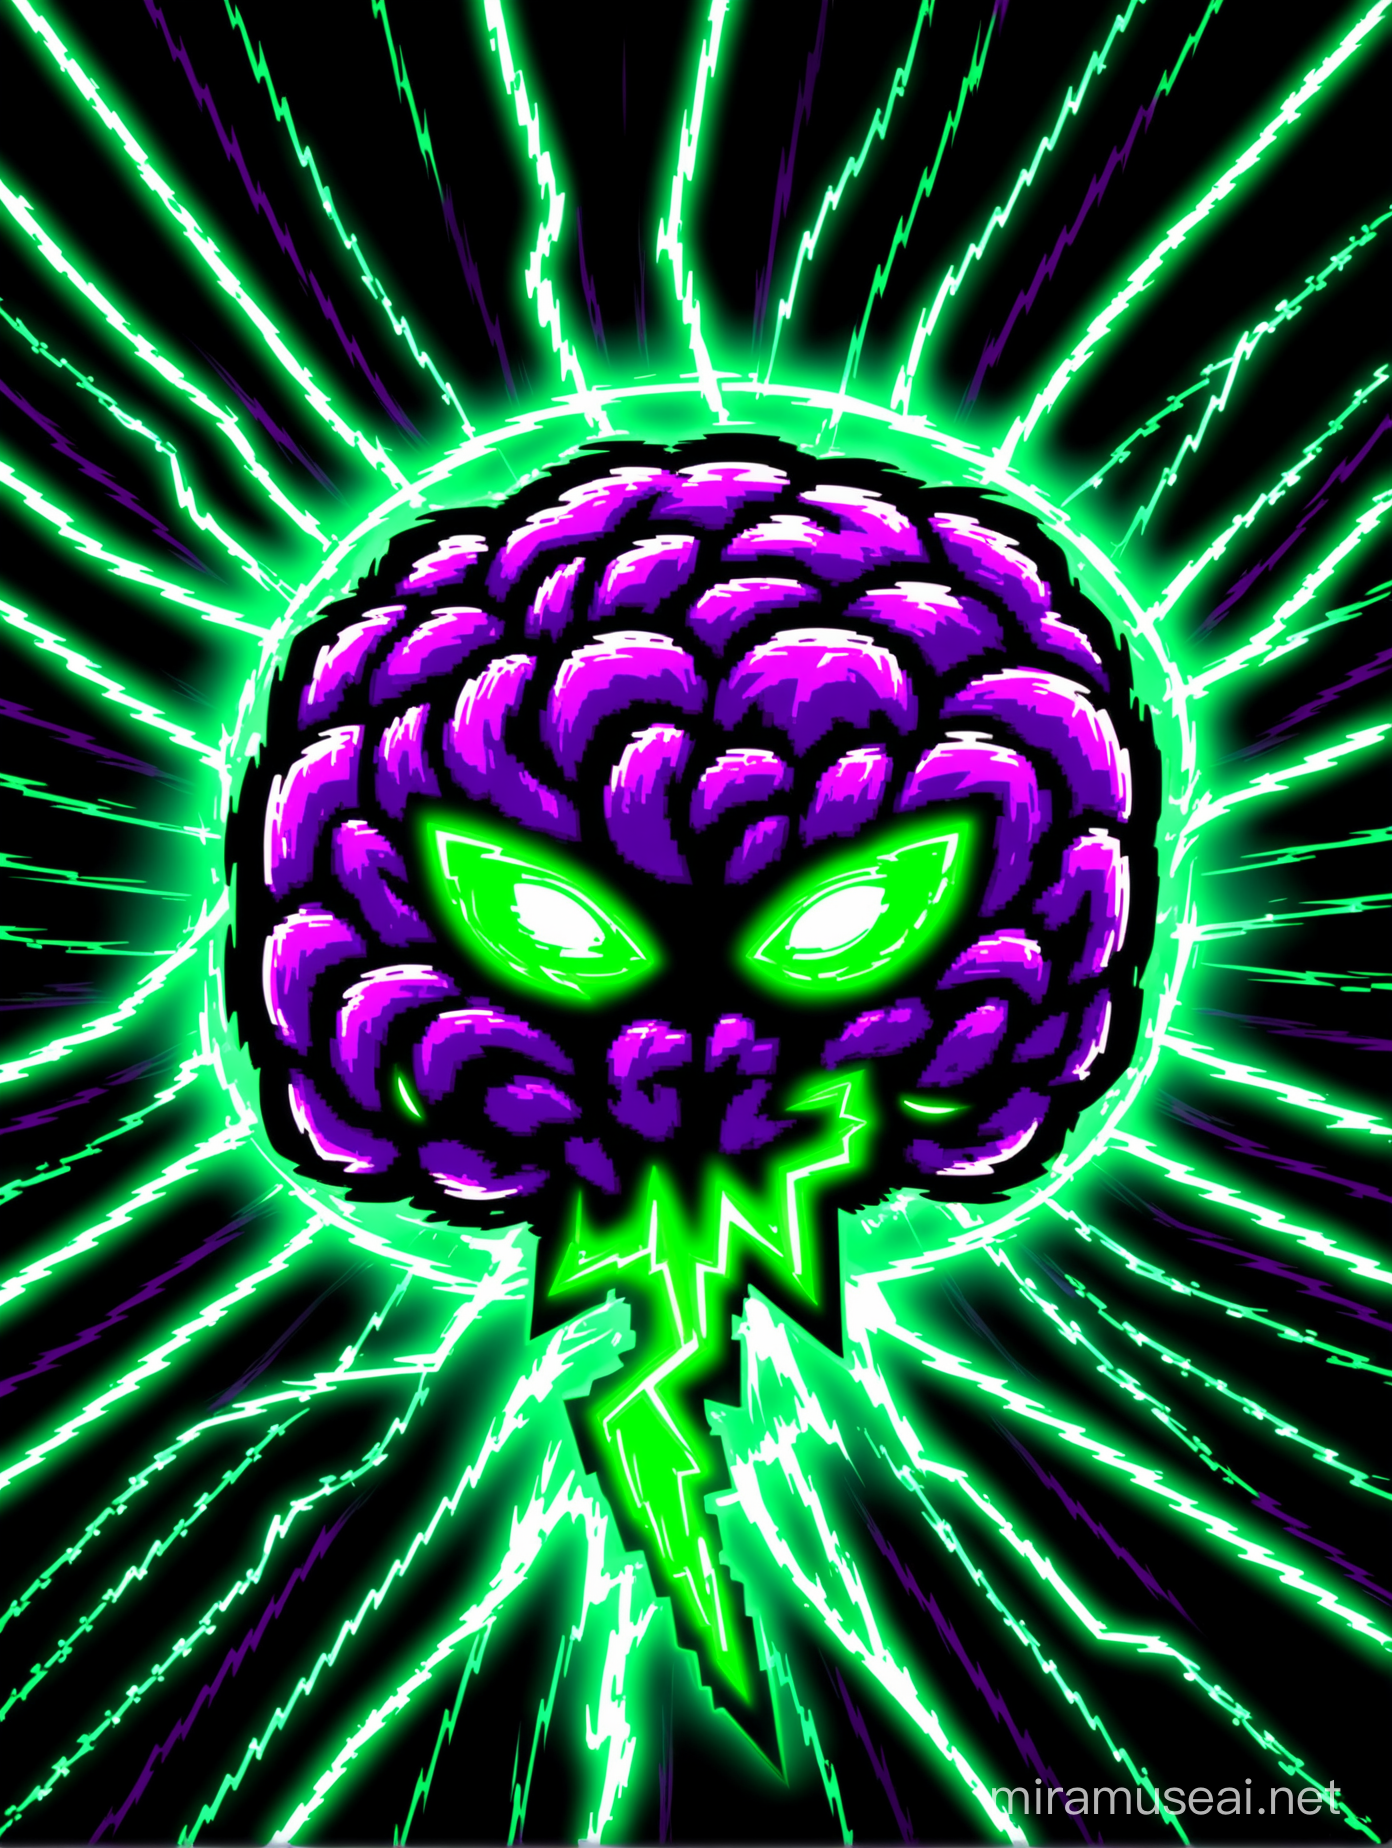 Vibrant Neon LightningInfused Brain Artwork on Black Background